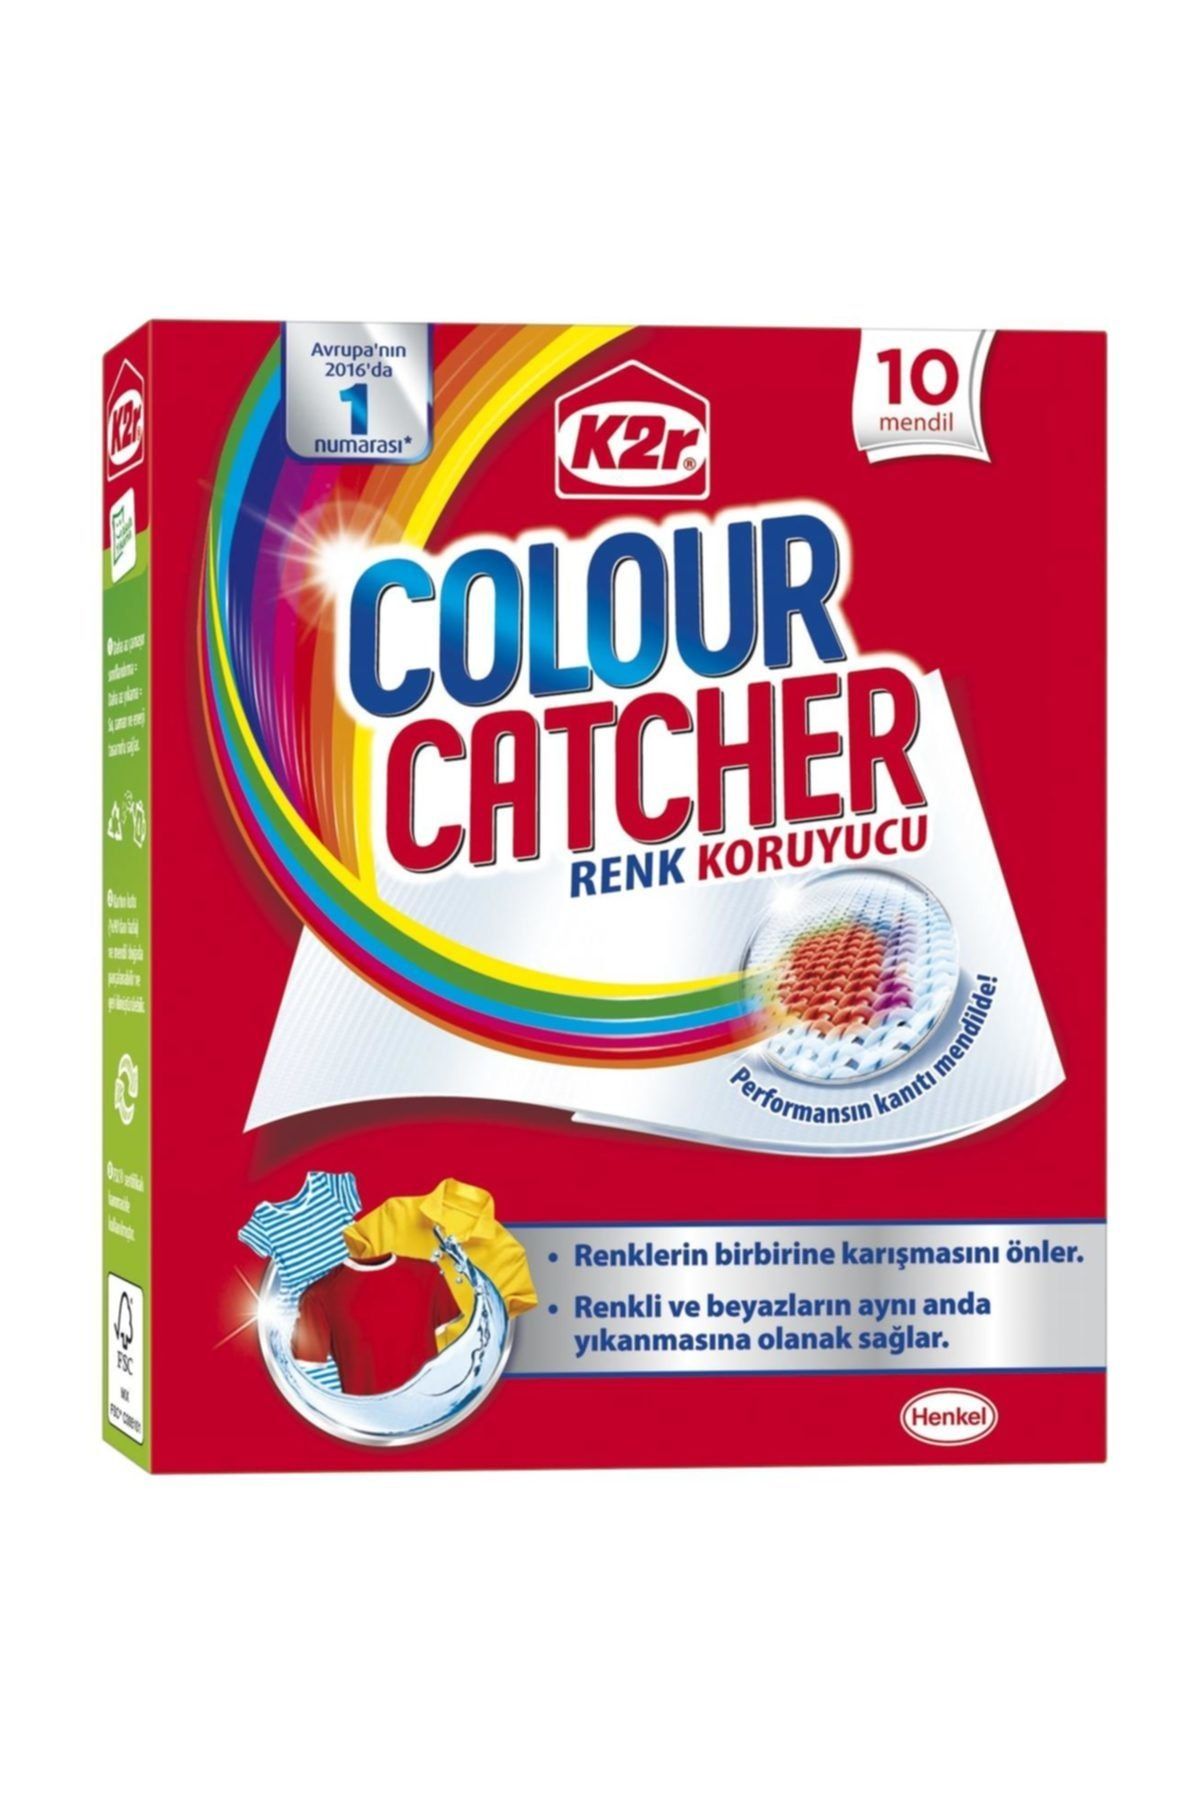 Perwoll K2r Colour Catcher Renk Koruyucu Mendil 10'lu  Mix 6 Lı